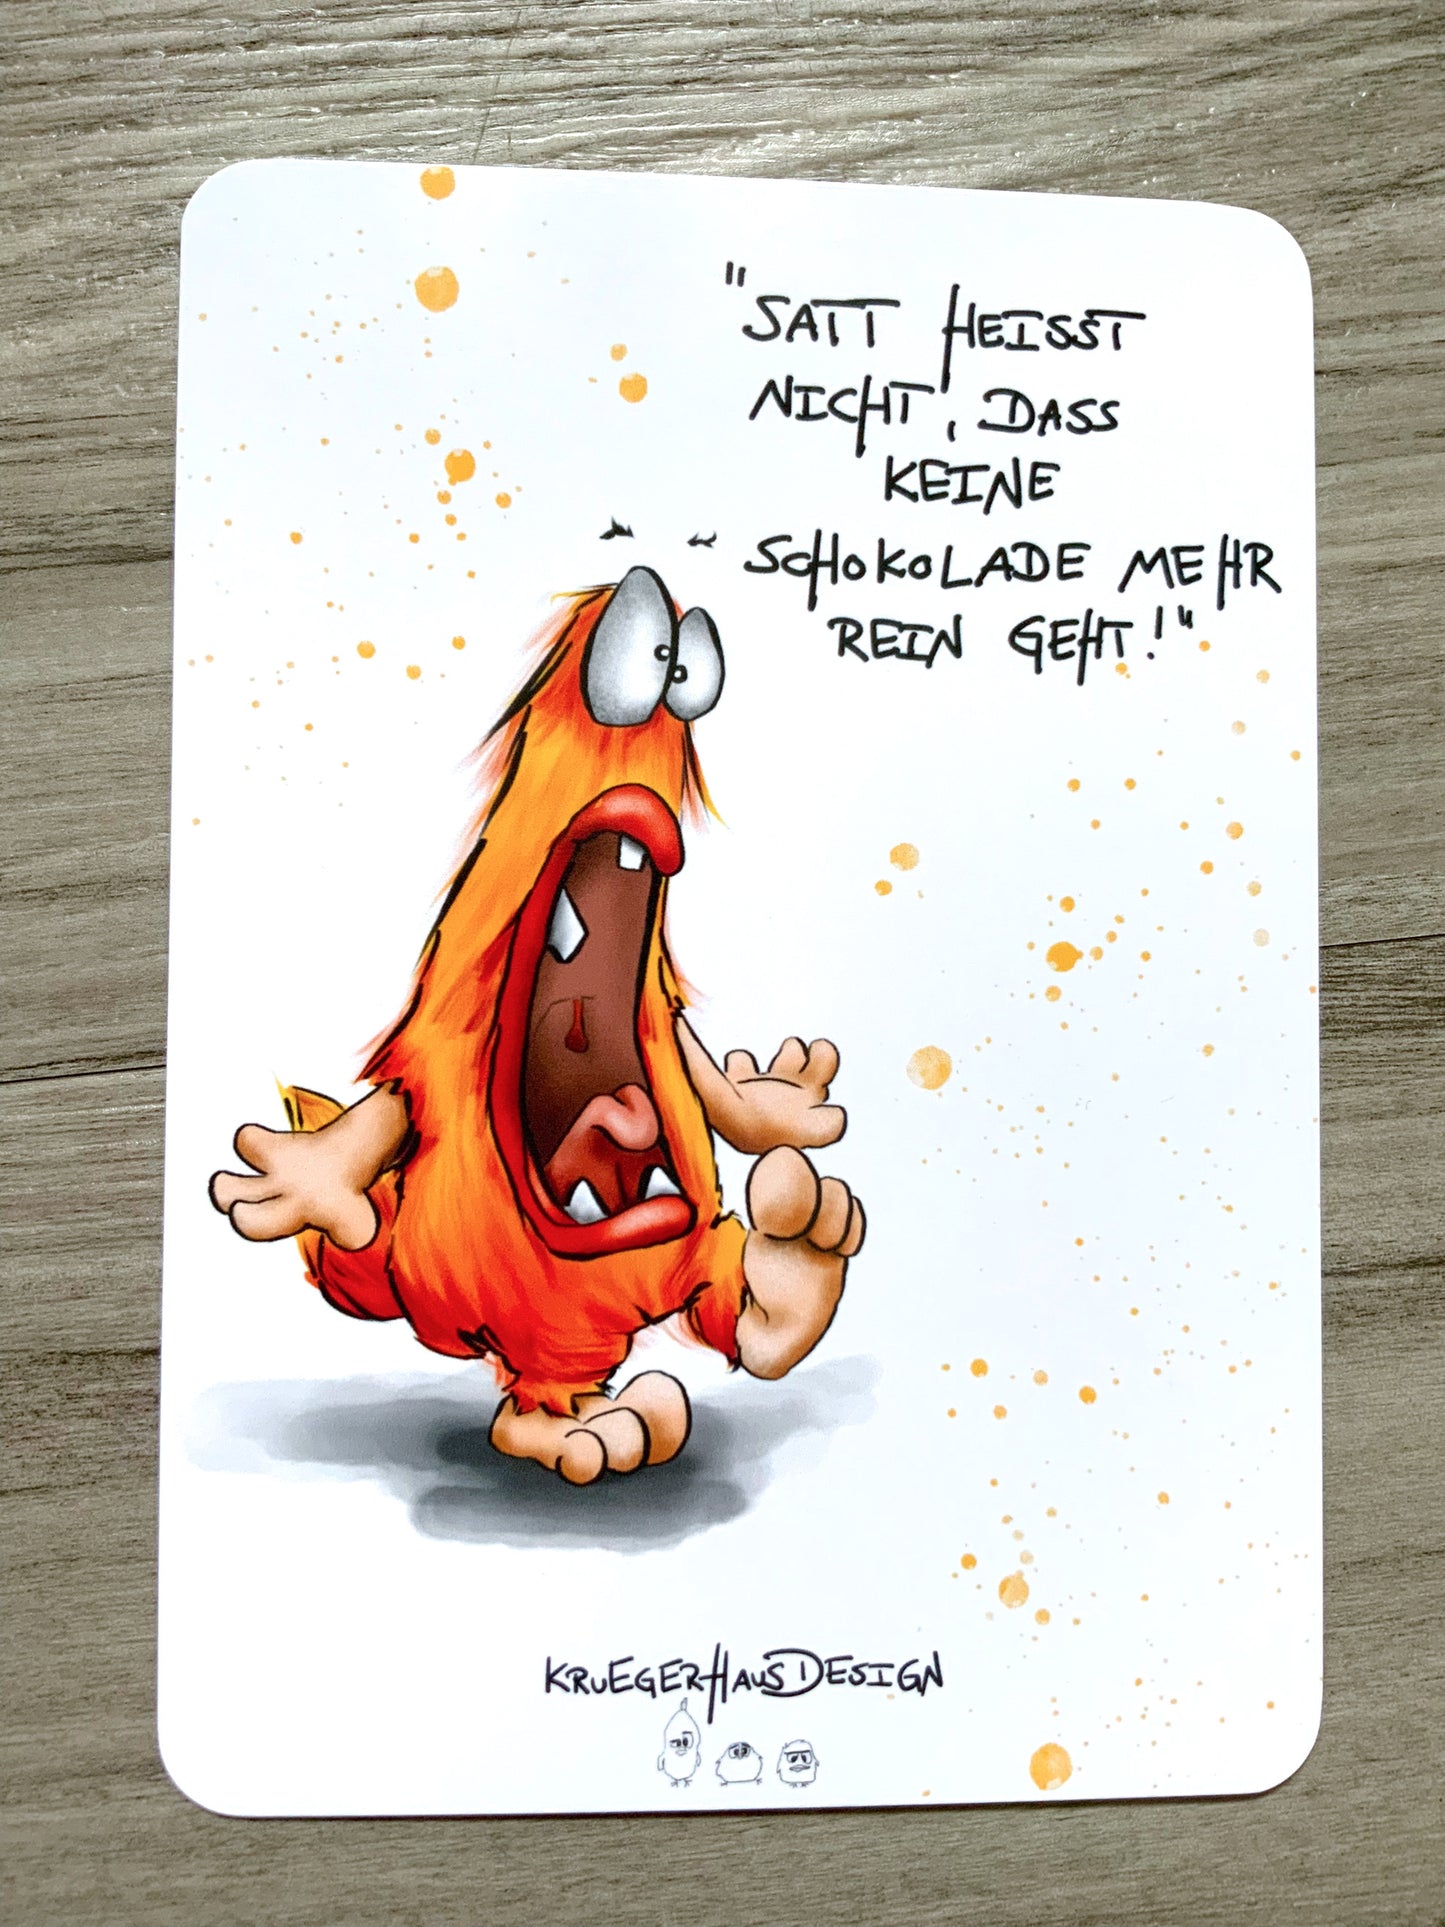 Postkarte Monster Kruegerhausdesign "Satt heisst nicht, dass keine Schokolade mehr rein geht!"